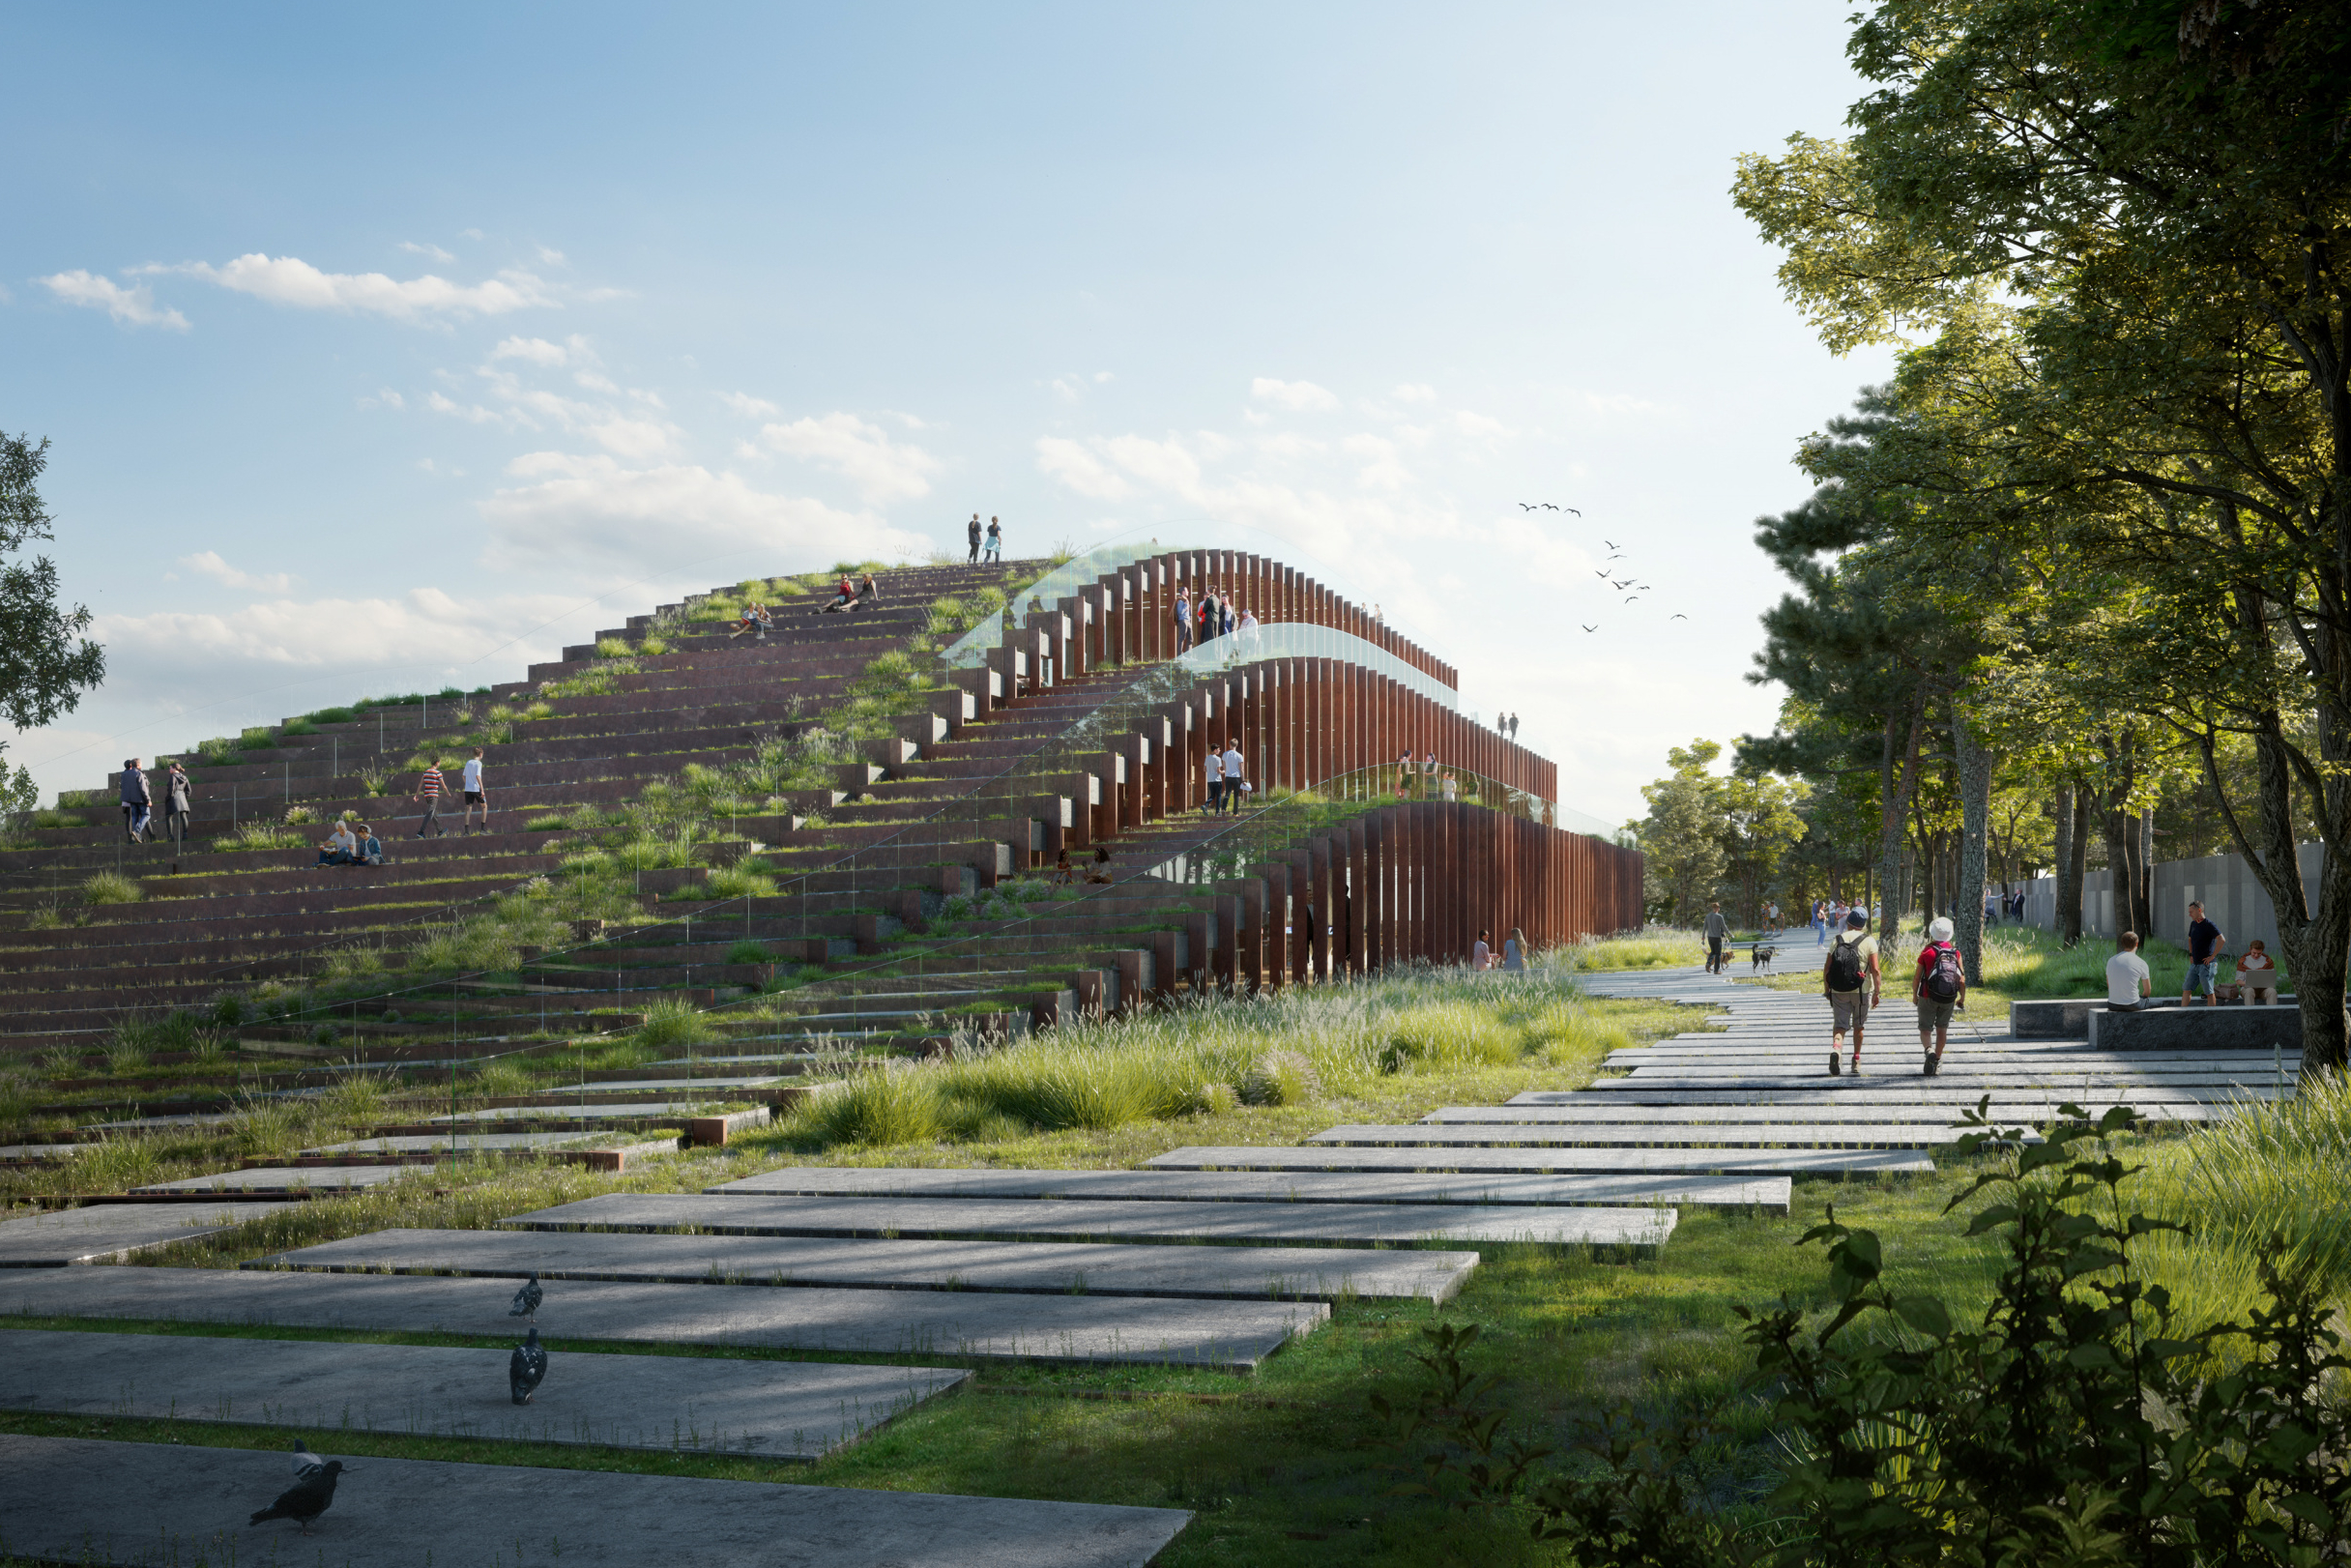 OFFICE OF THE FUTURE: GASTRONOMY OPEN ECOSYSTEM 未来办公室 - 与城市自然景观相呼应